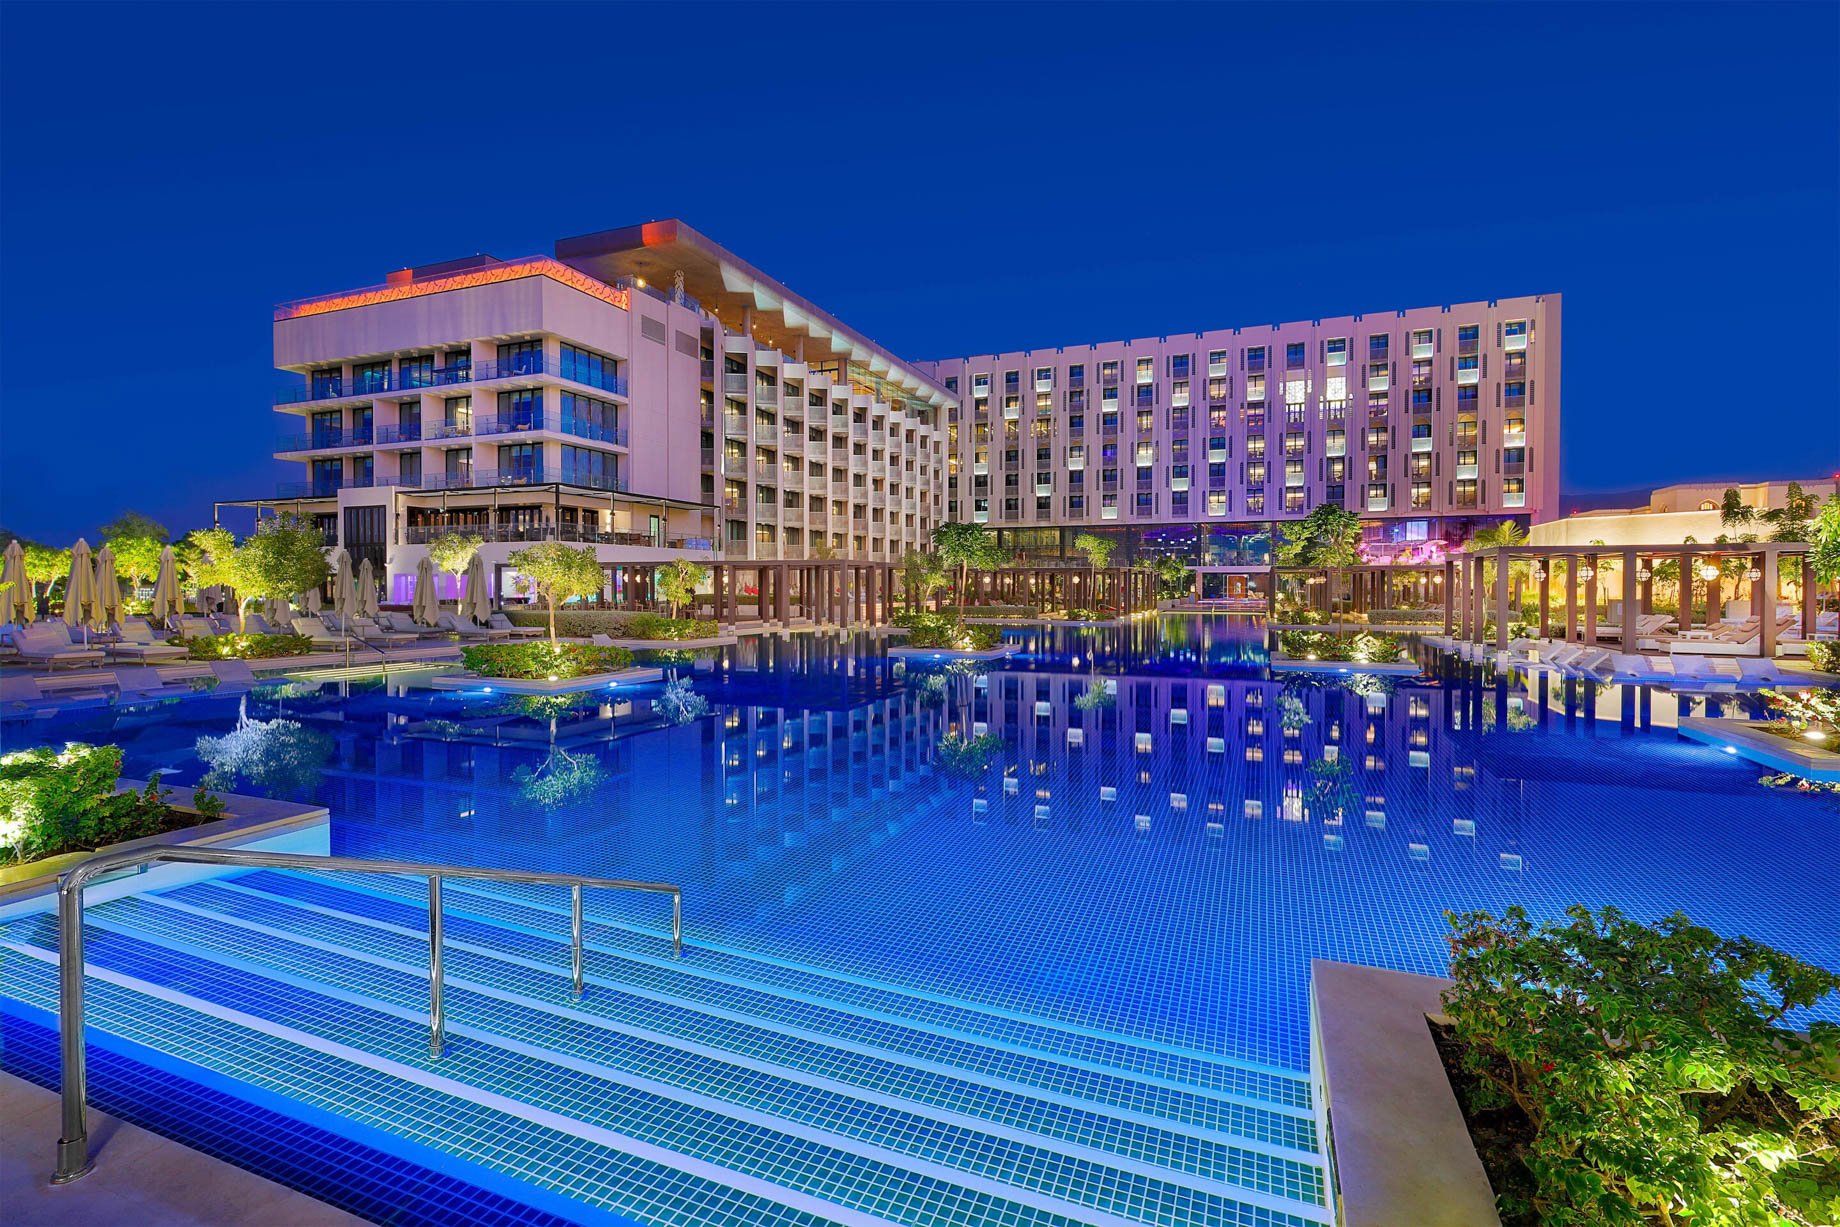 W Muscat Resort - Muscat, Oman - Exterior Swimming Pool Night